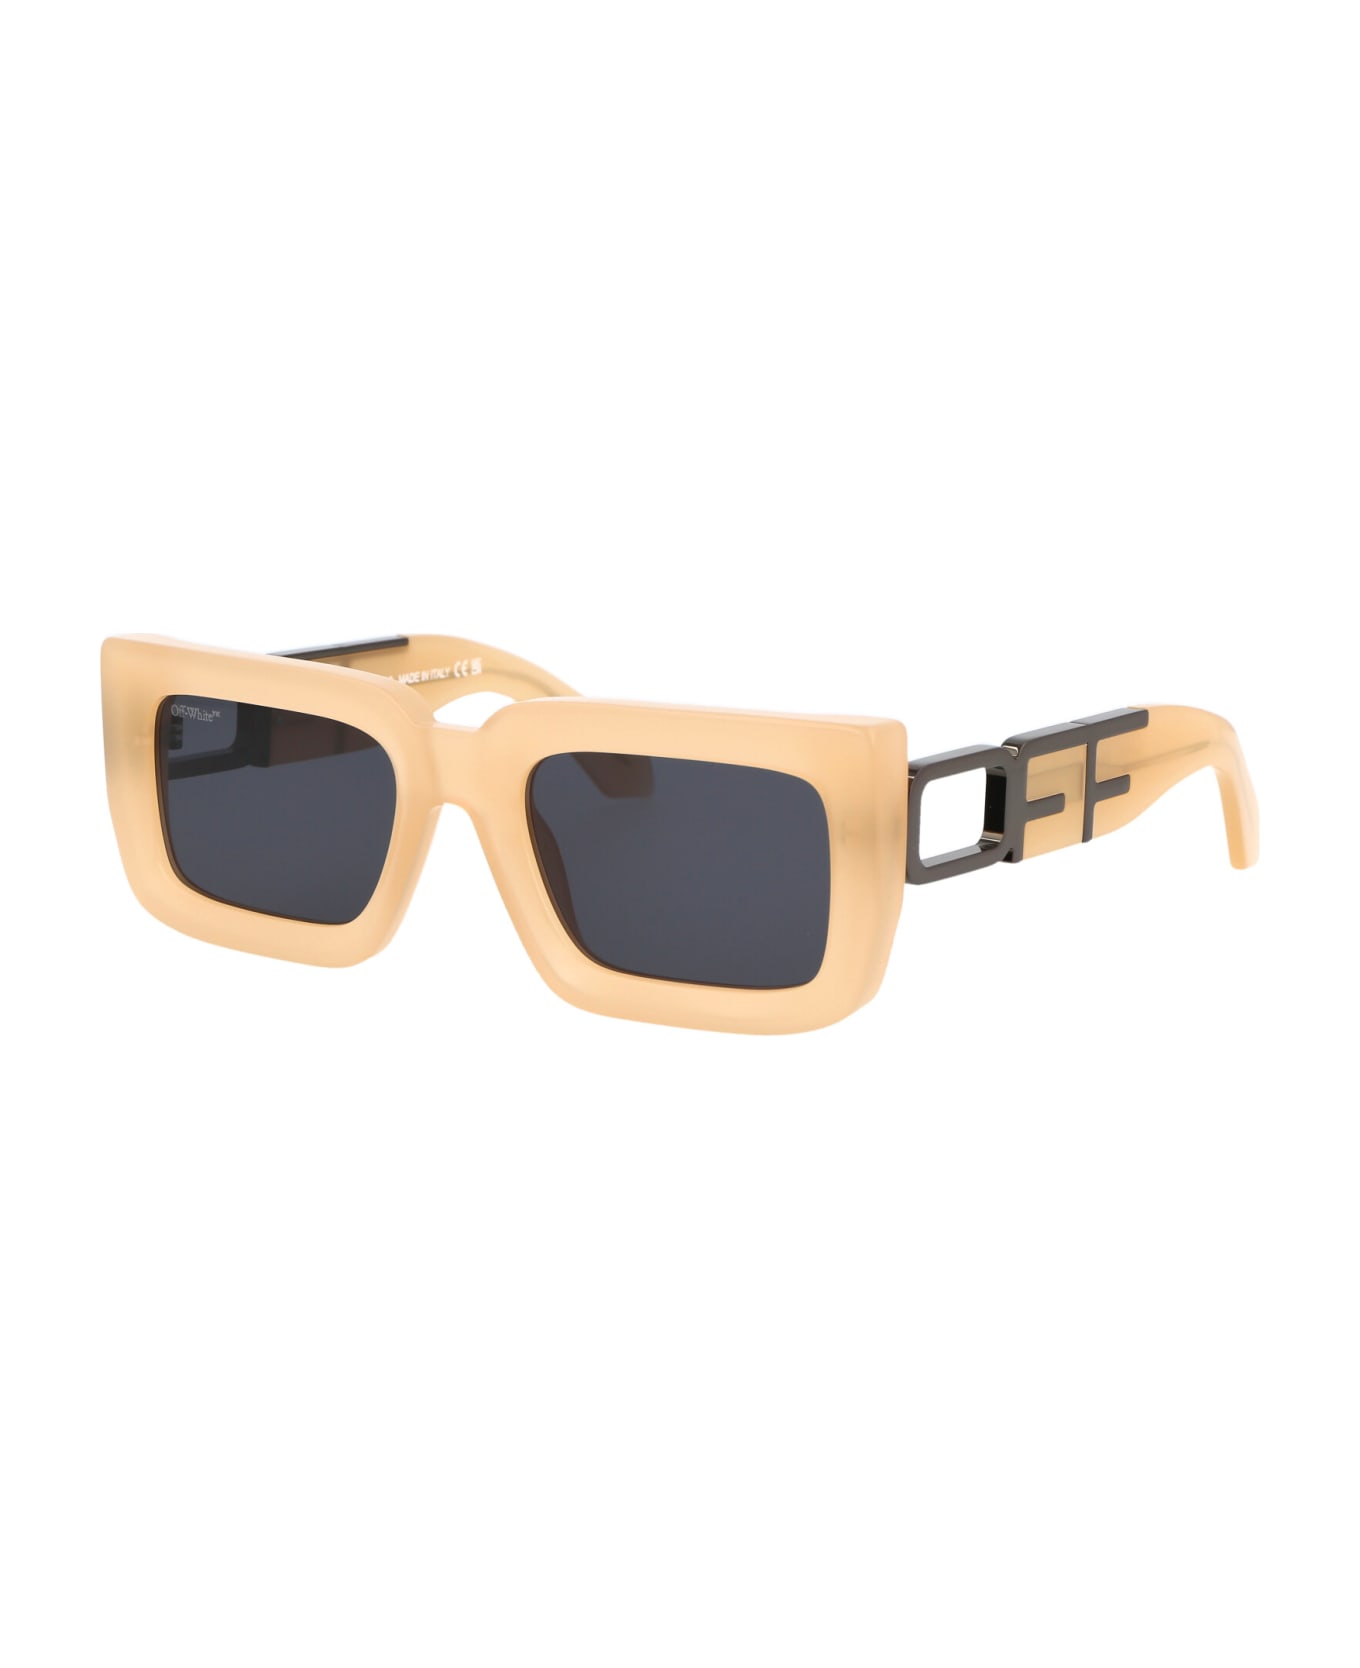 Off-White Boston Sunglasses - 1707 SAND DARK GREY